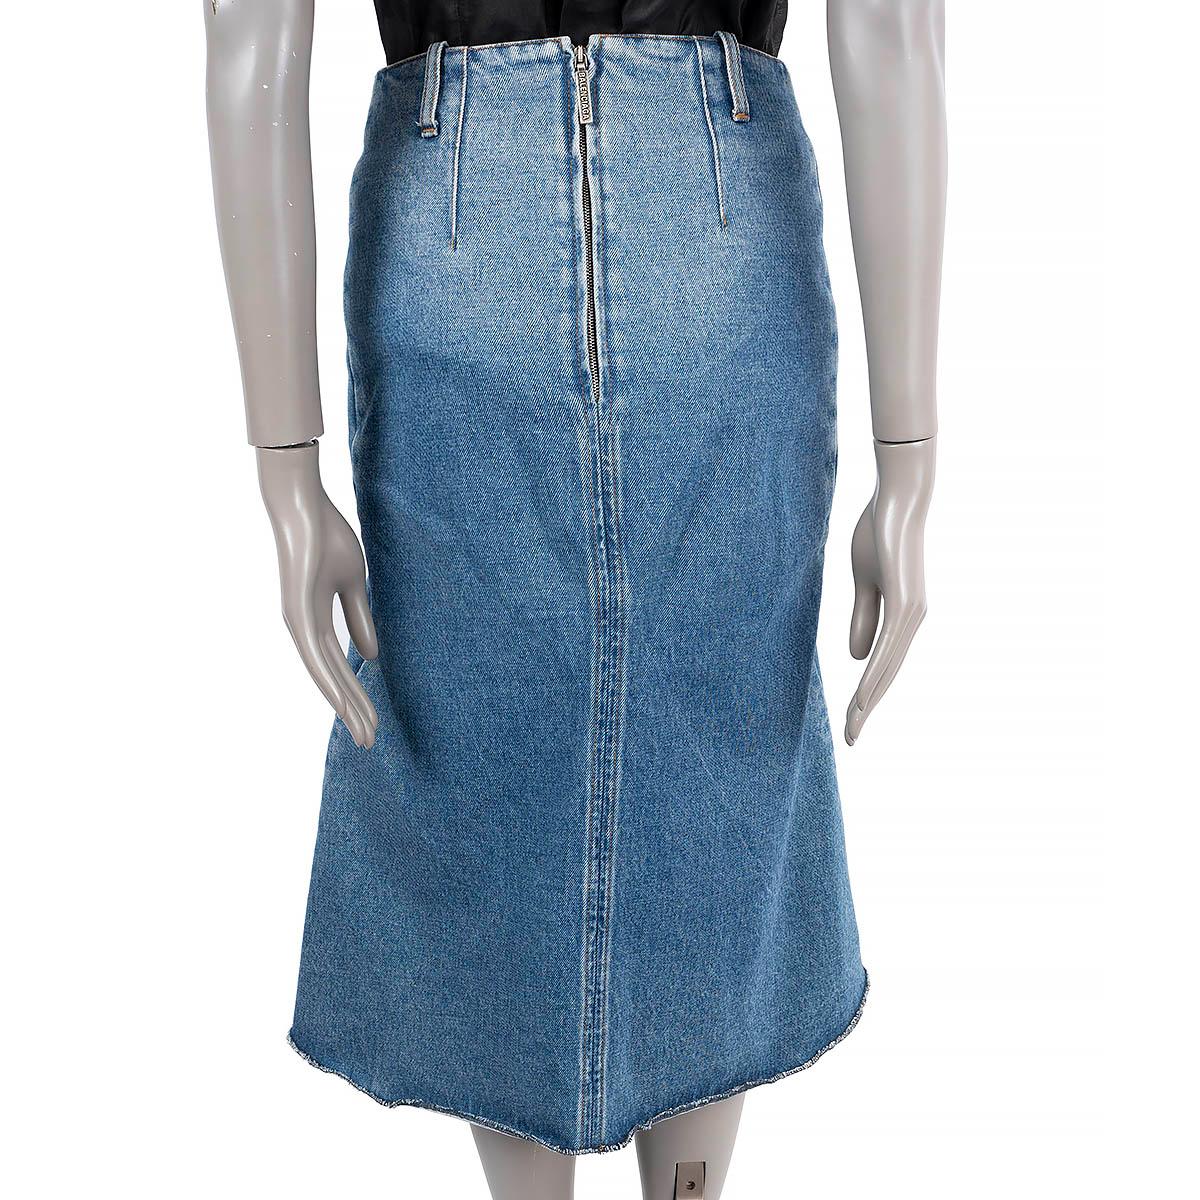 BALENCIAGA bleu coton 2019 FLUTED HIGH WAISTED DENIM Skirt 38 S Pour femmes en vente